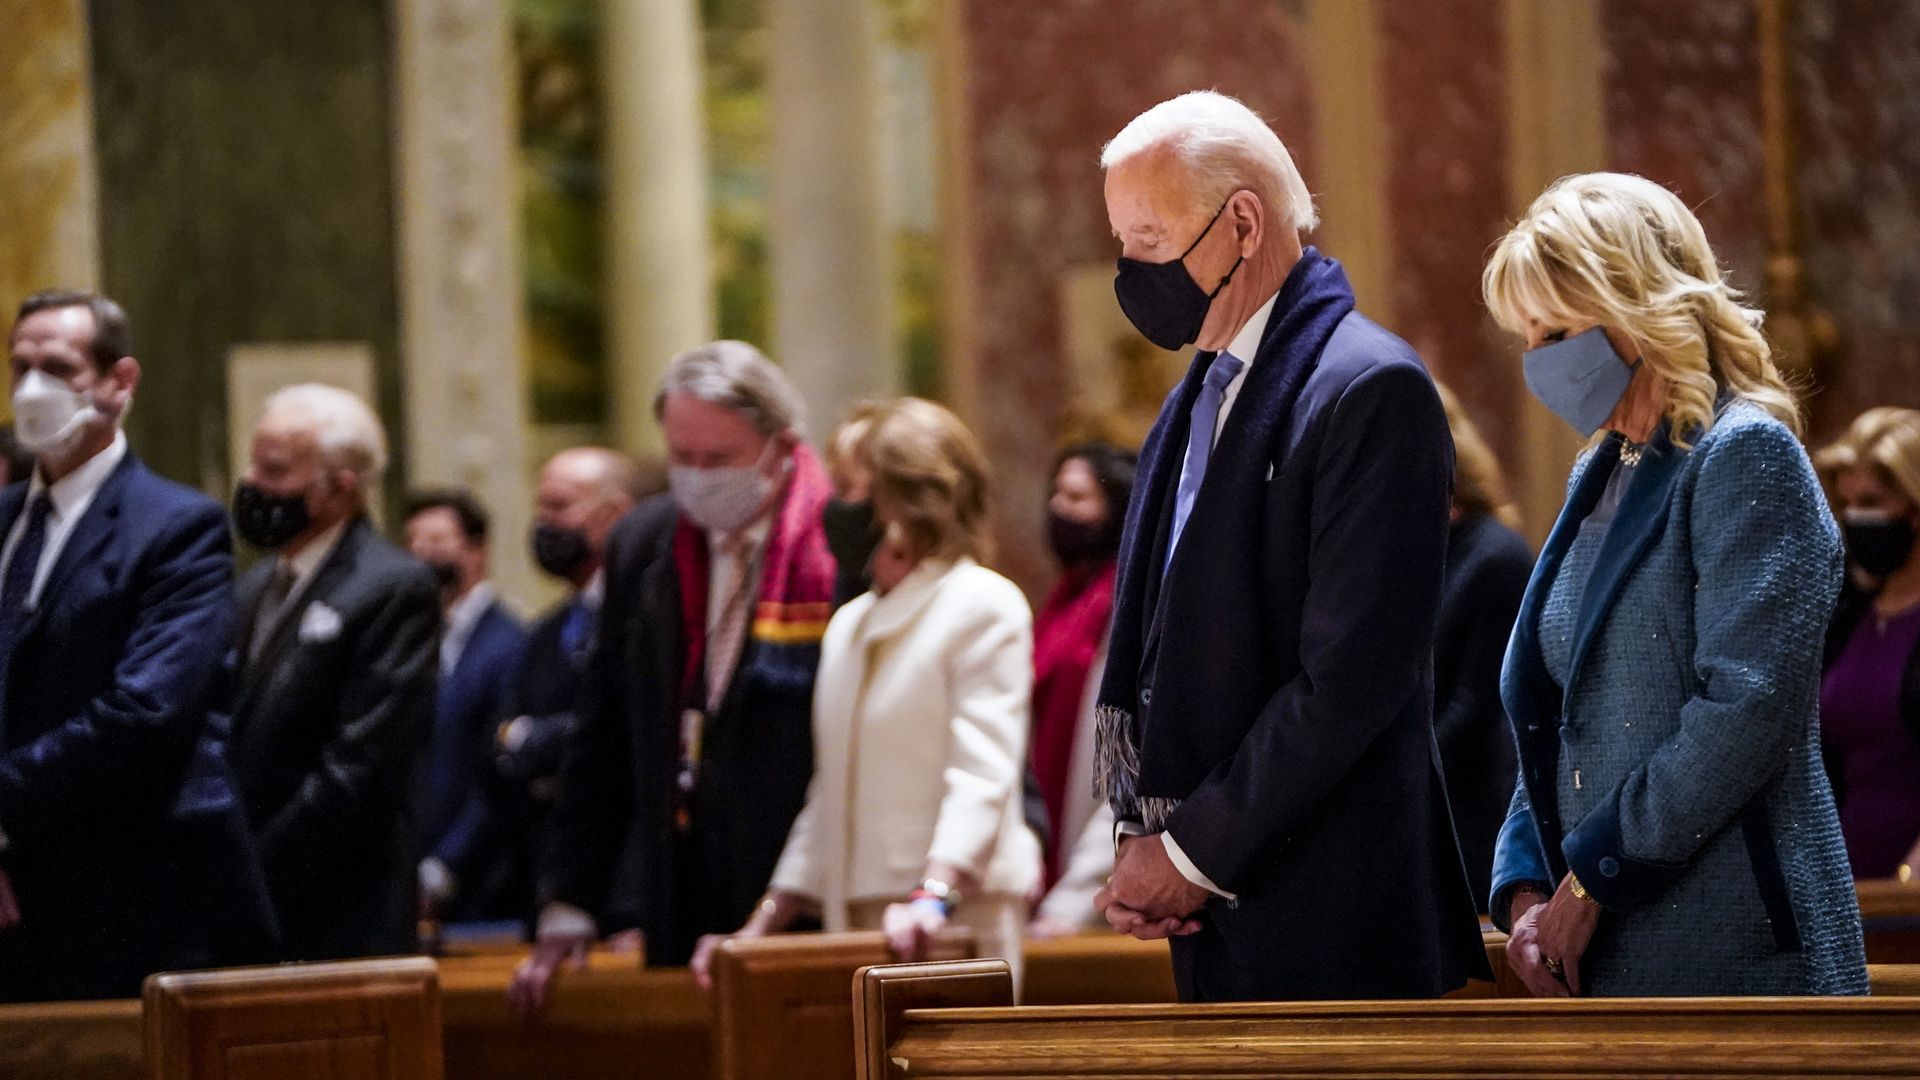 Photo of Joe and Jill Biden praying in formalwear in a church pew